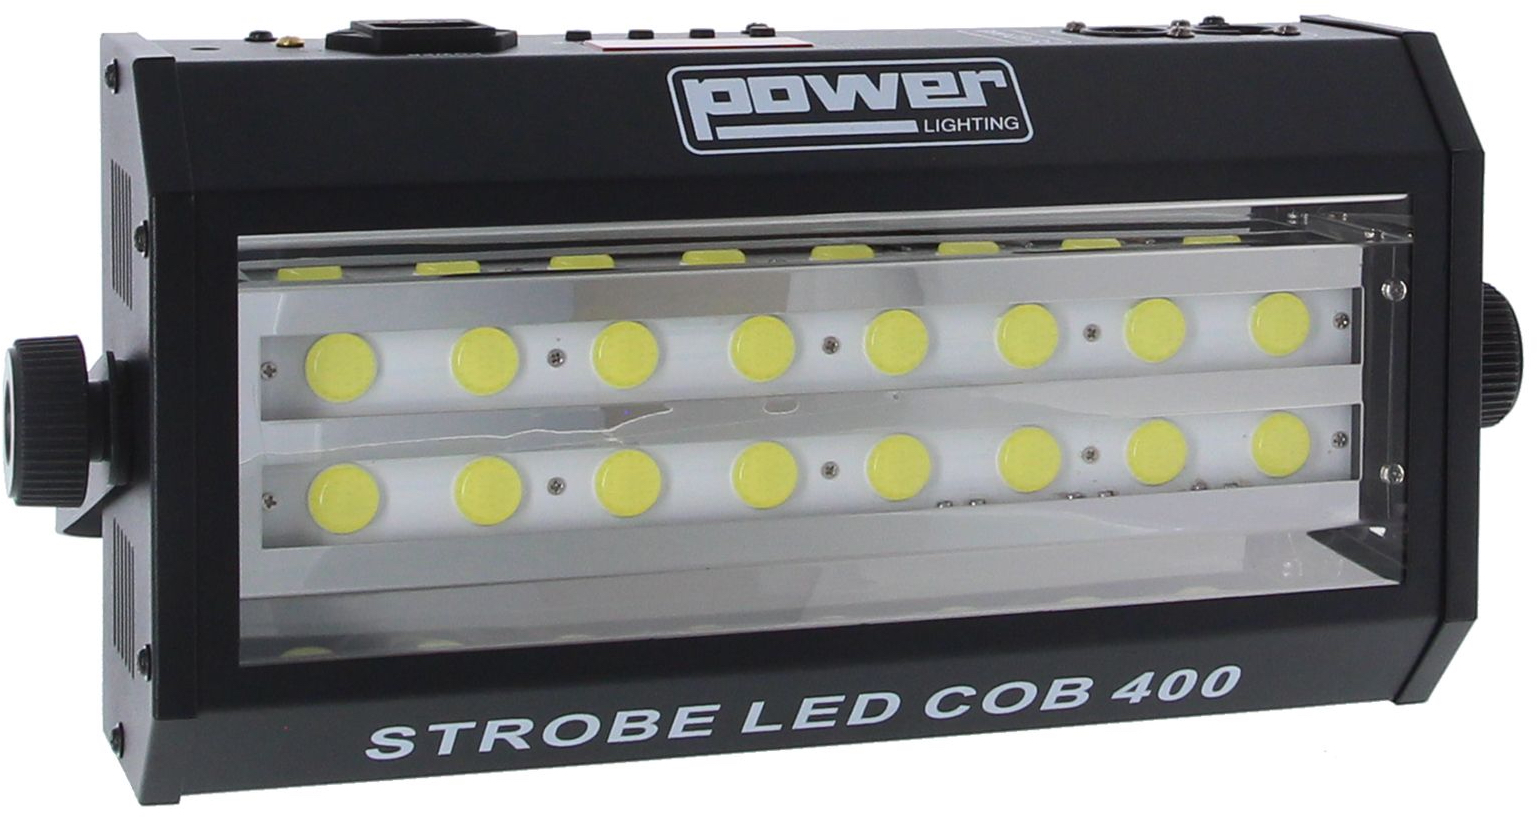 Power Lighting Strobe Led Cob 400 - Strobe - Variation 1